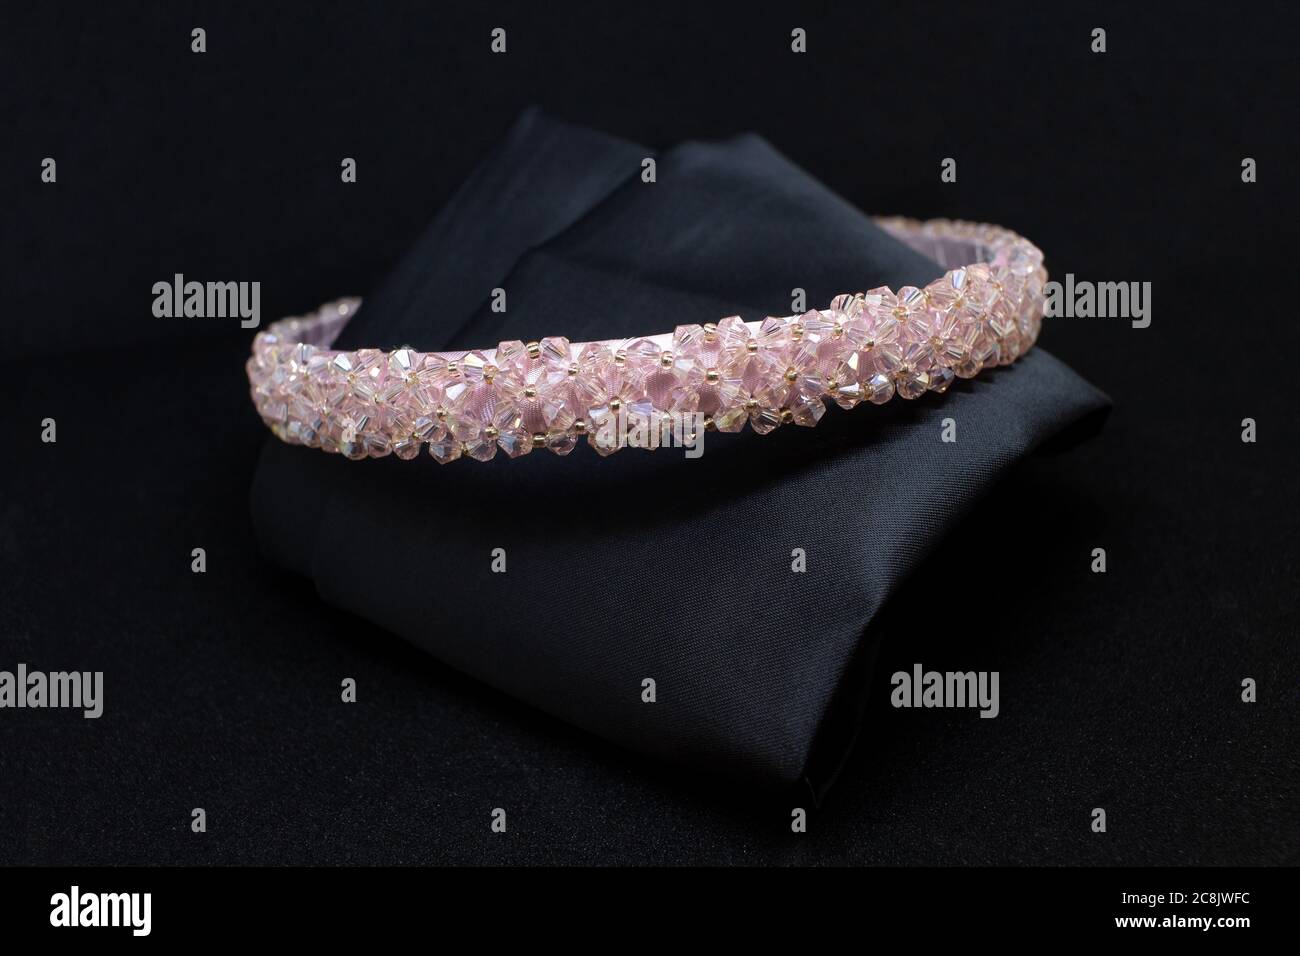 Pink gemstones diamonds hair band tiara on black background. Jewelry display isolated concept Stock Photo